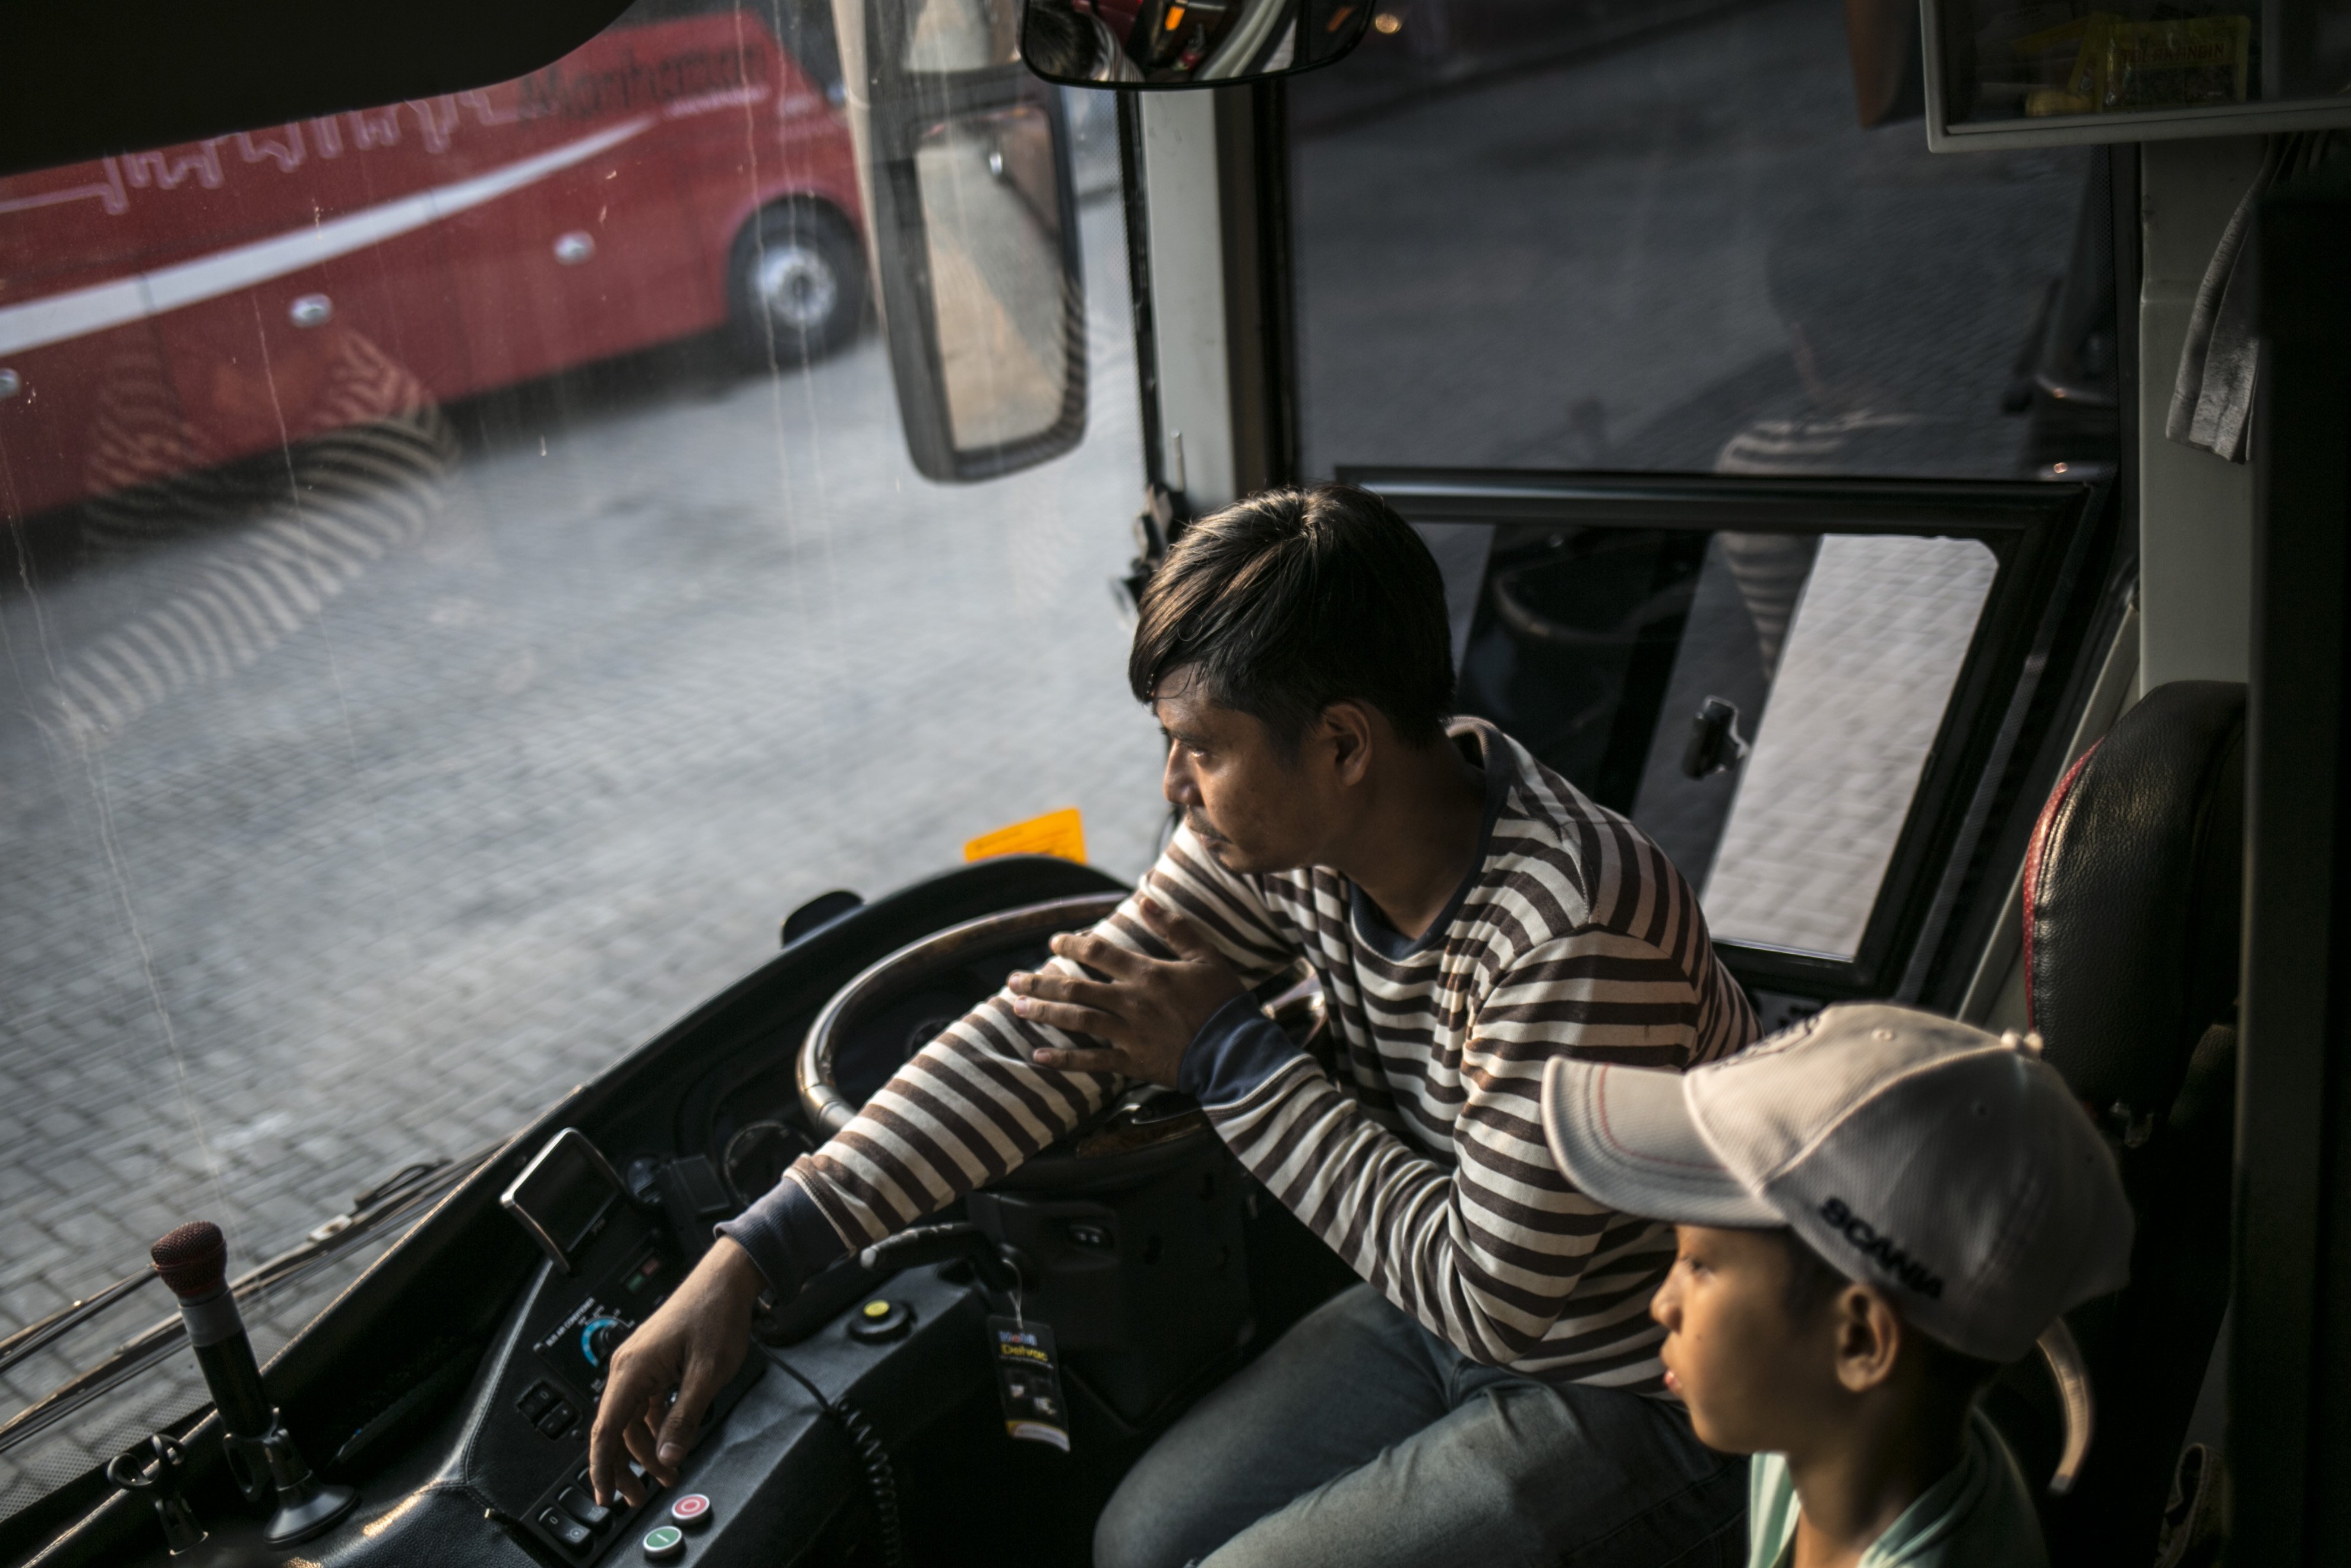 Driver bus, Ade (34) berbincang dengan anaknya di salah satu pool bus pariwisata di kawasan Tanjung Barat, Jagakarsa, Jakarta, Selasa (28/7/2020). Masih diberlakukannya Pembatasan Sosial Bersekala Besar (PSBB) dan penutupan tempat rekreasi akibat Covid-19, berimbas pada jasa transportasi pariwisata. Sejak bulan Maret pengelola mengaku mengalami penurunan pendapatan dan penyewaan bus hingga 80%.